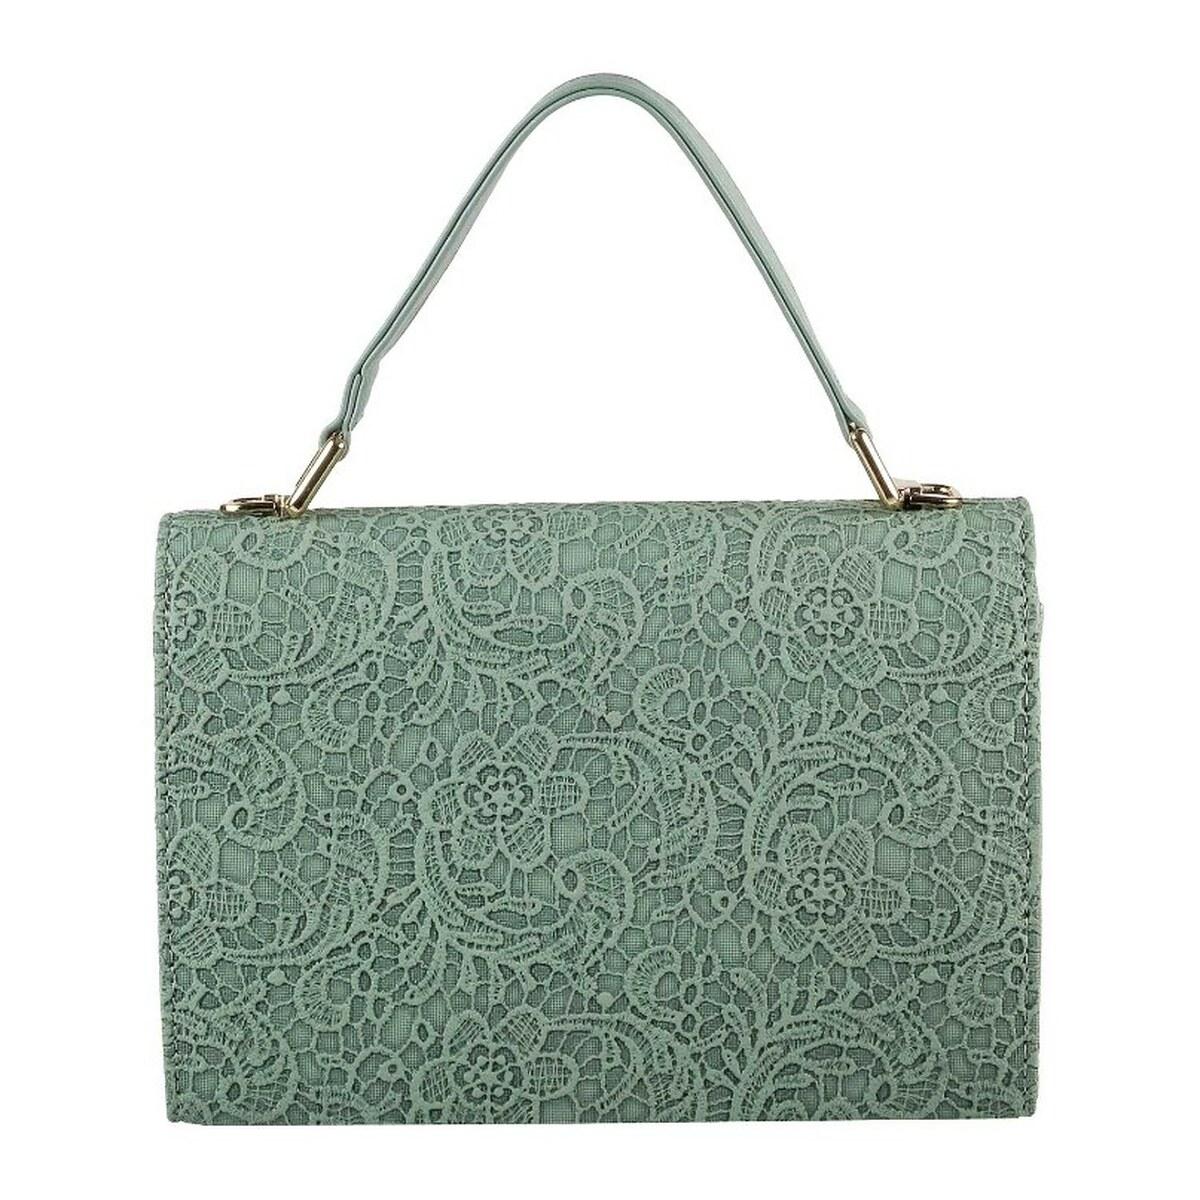 Tatted lace and motif on a handbag - Ranjana's Craft Blog